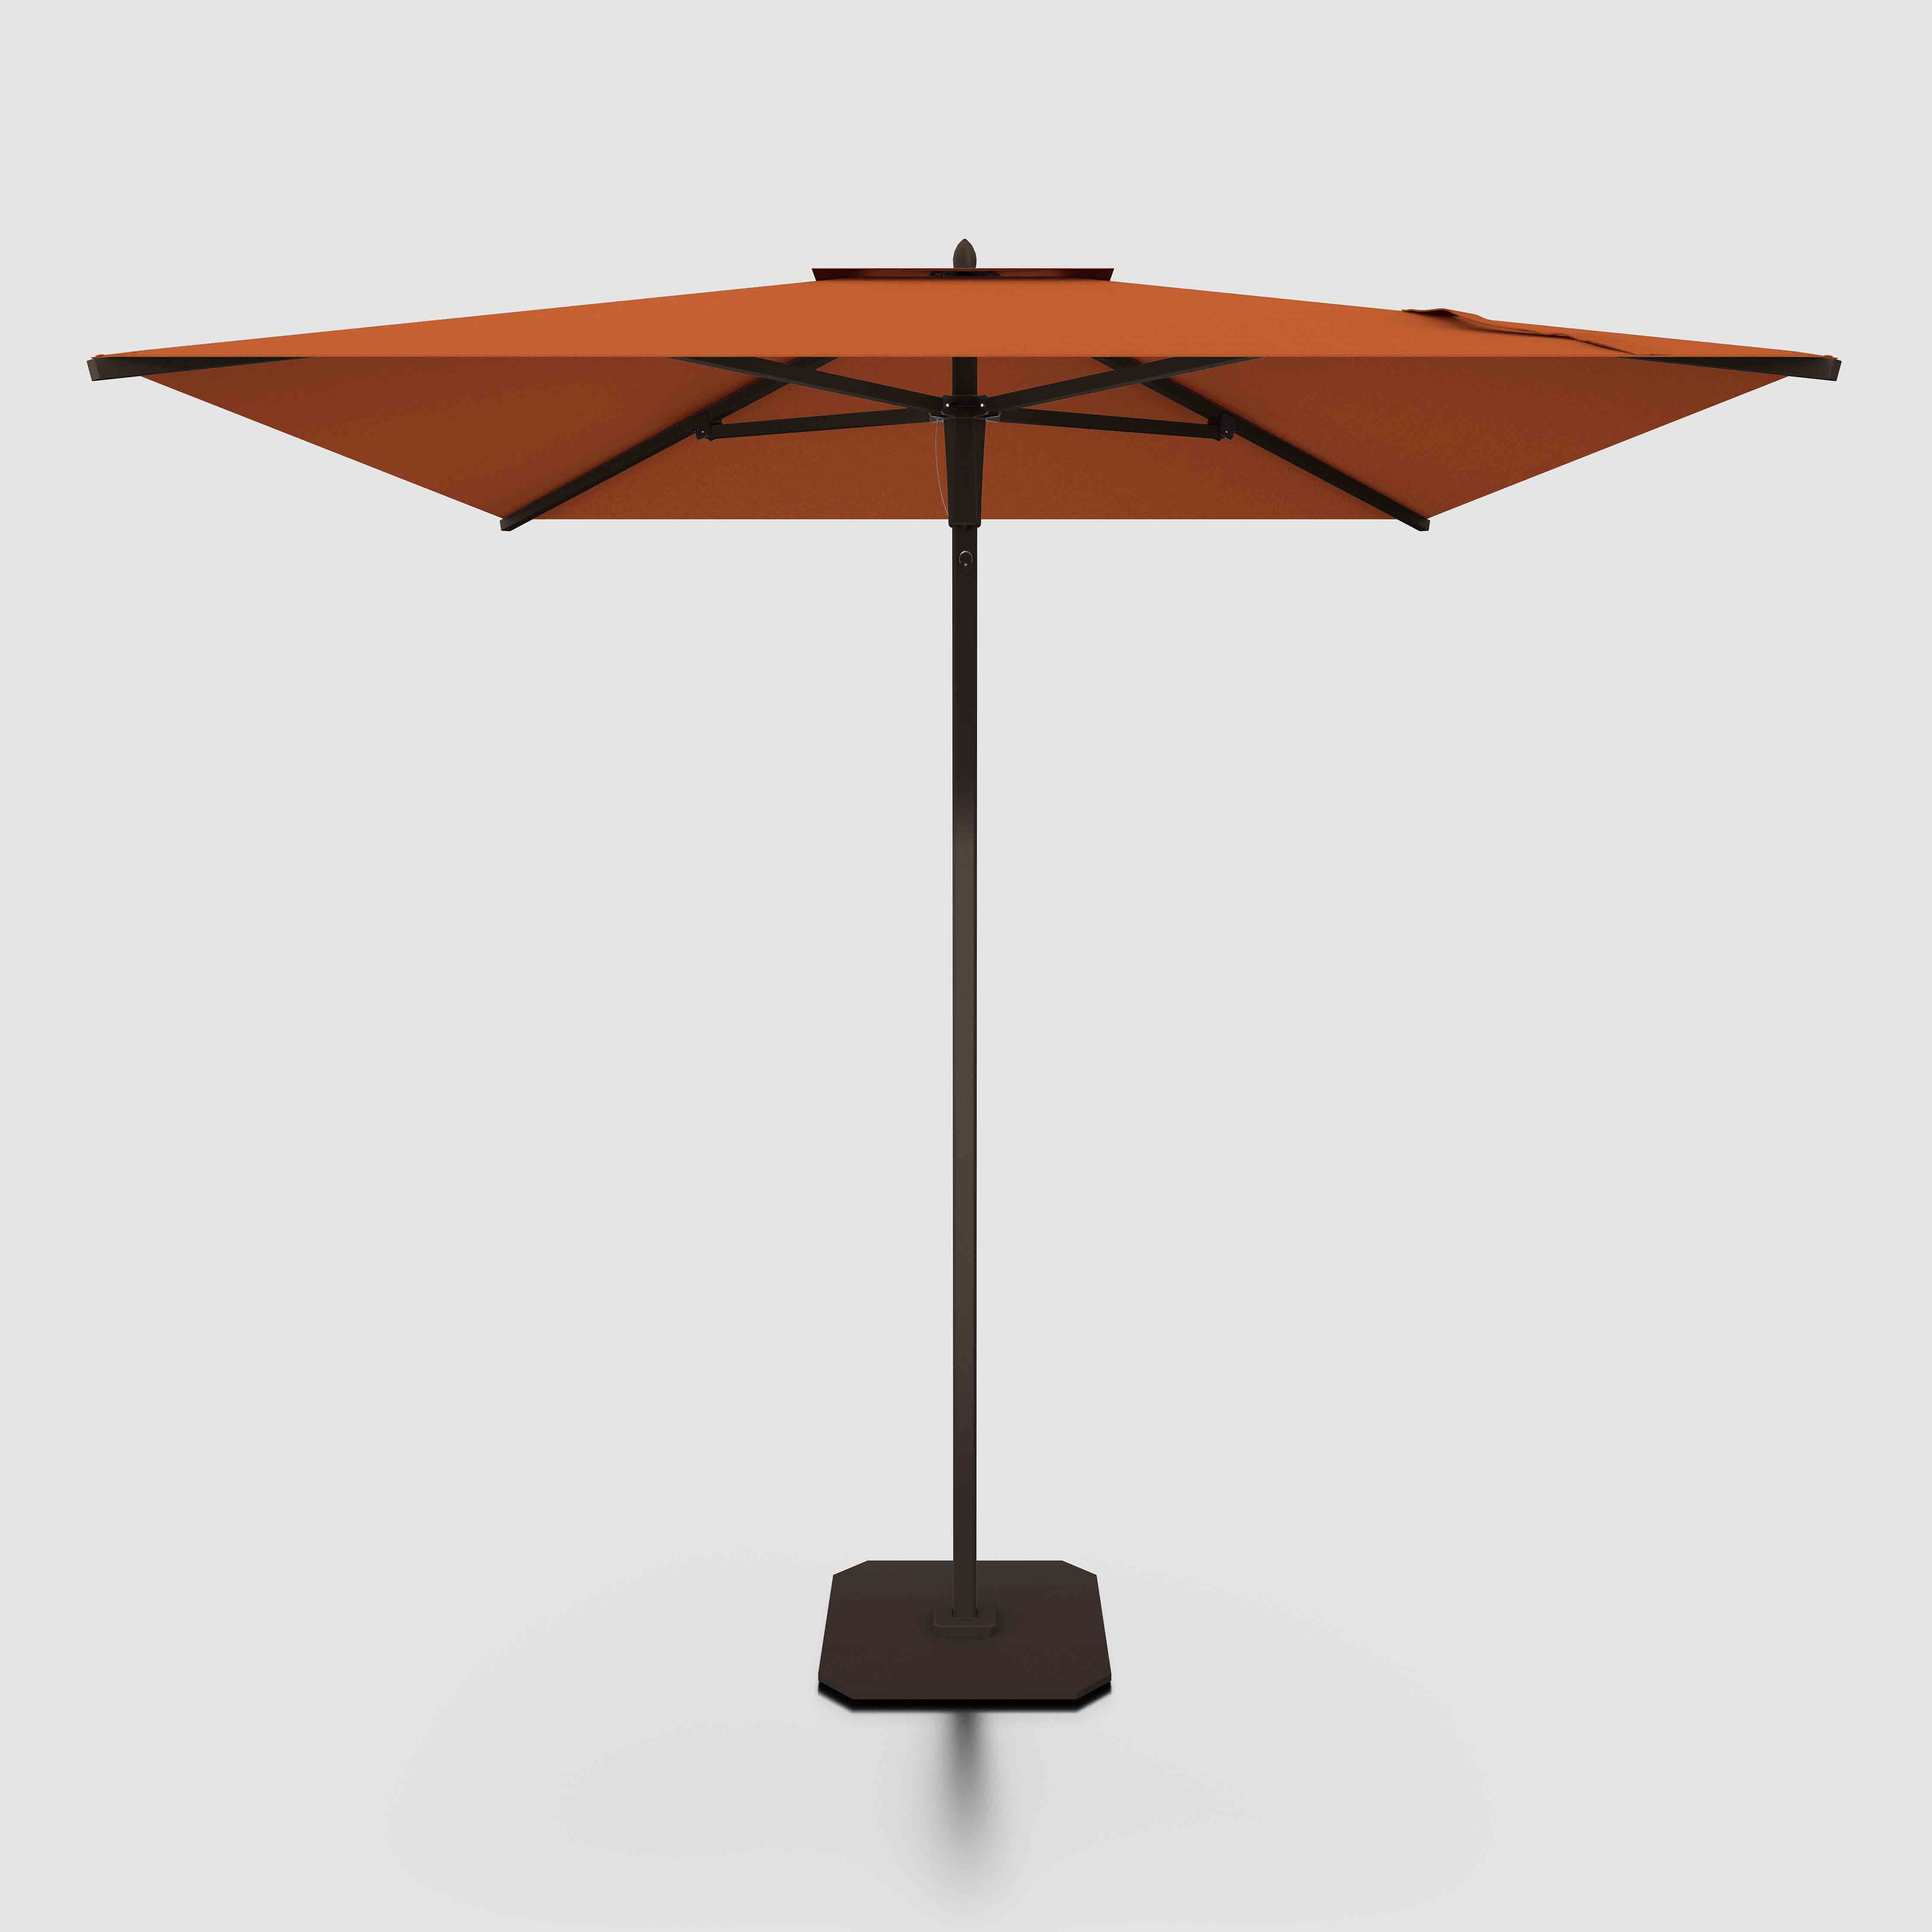 The Slight™ - Terre cuite Sunbrella